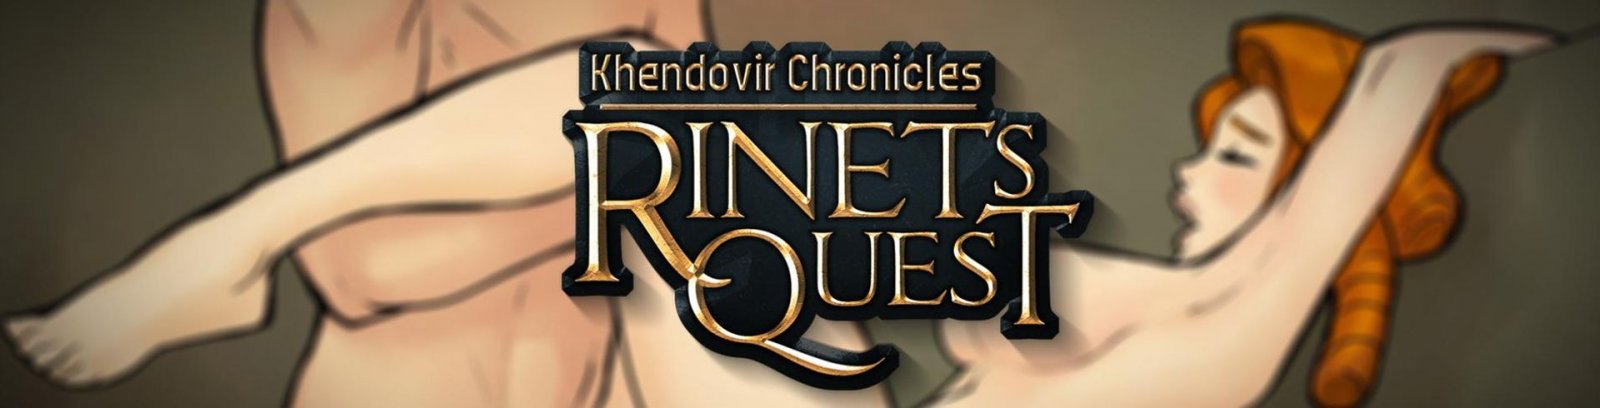 StalkerRoguen - Khendovirs Chronicles Rinets Quest Version 0.14.02 Win/Mac